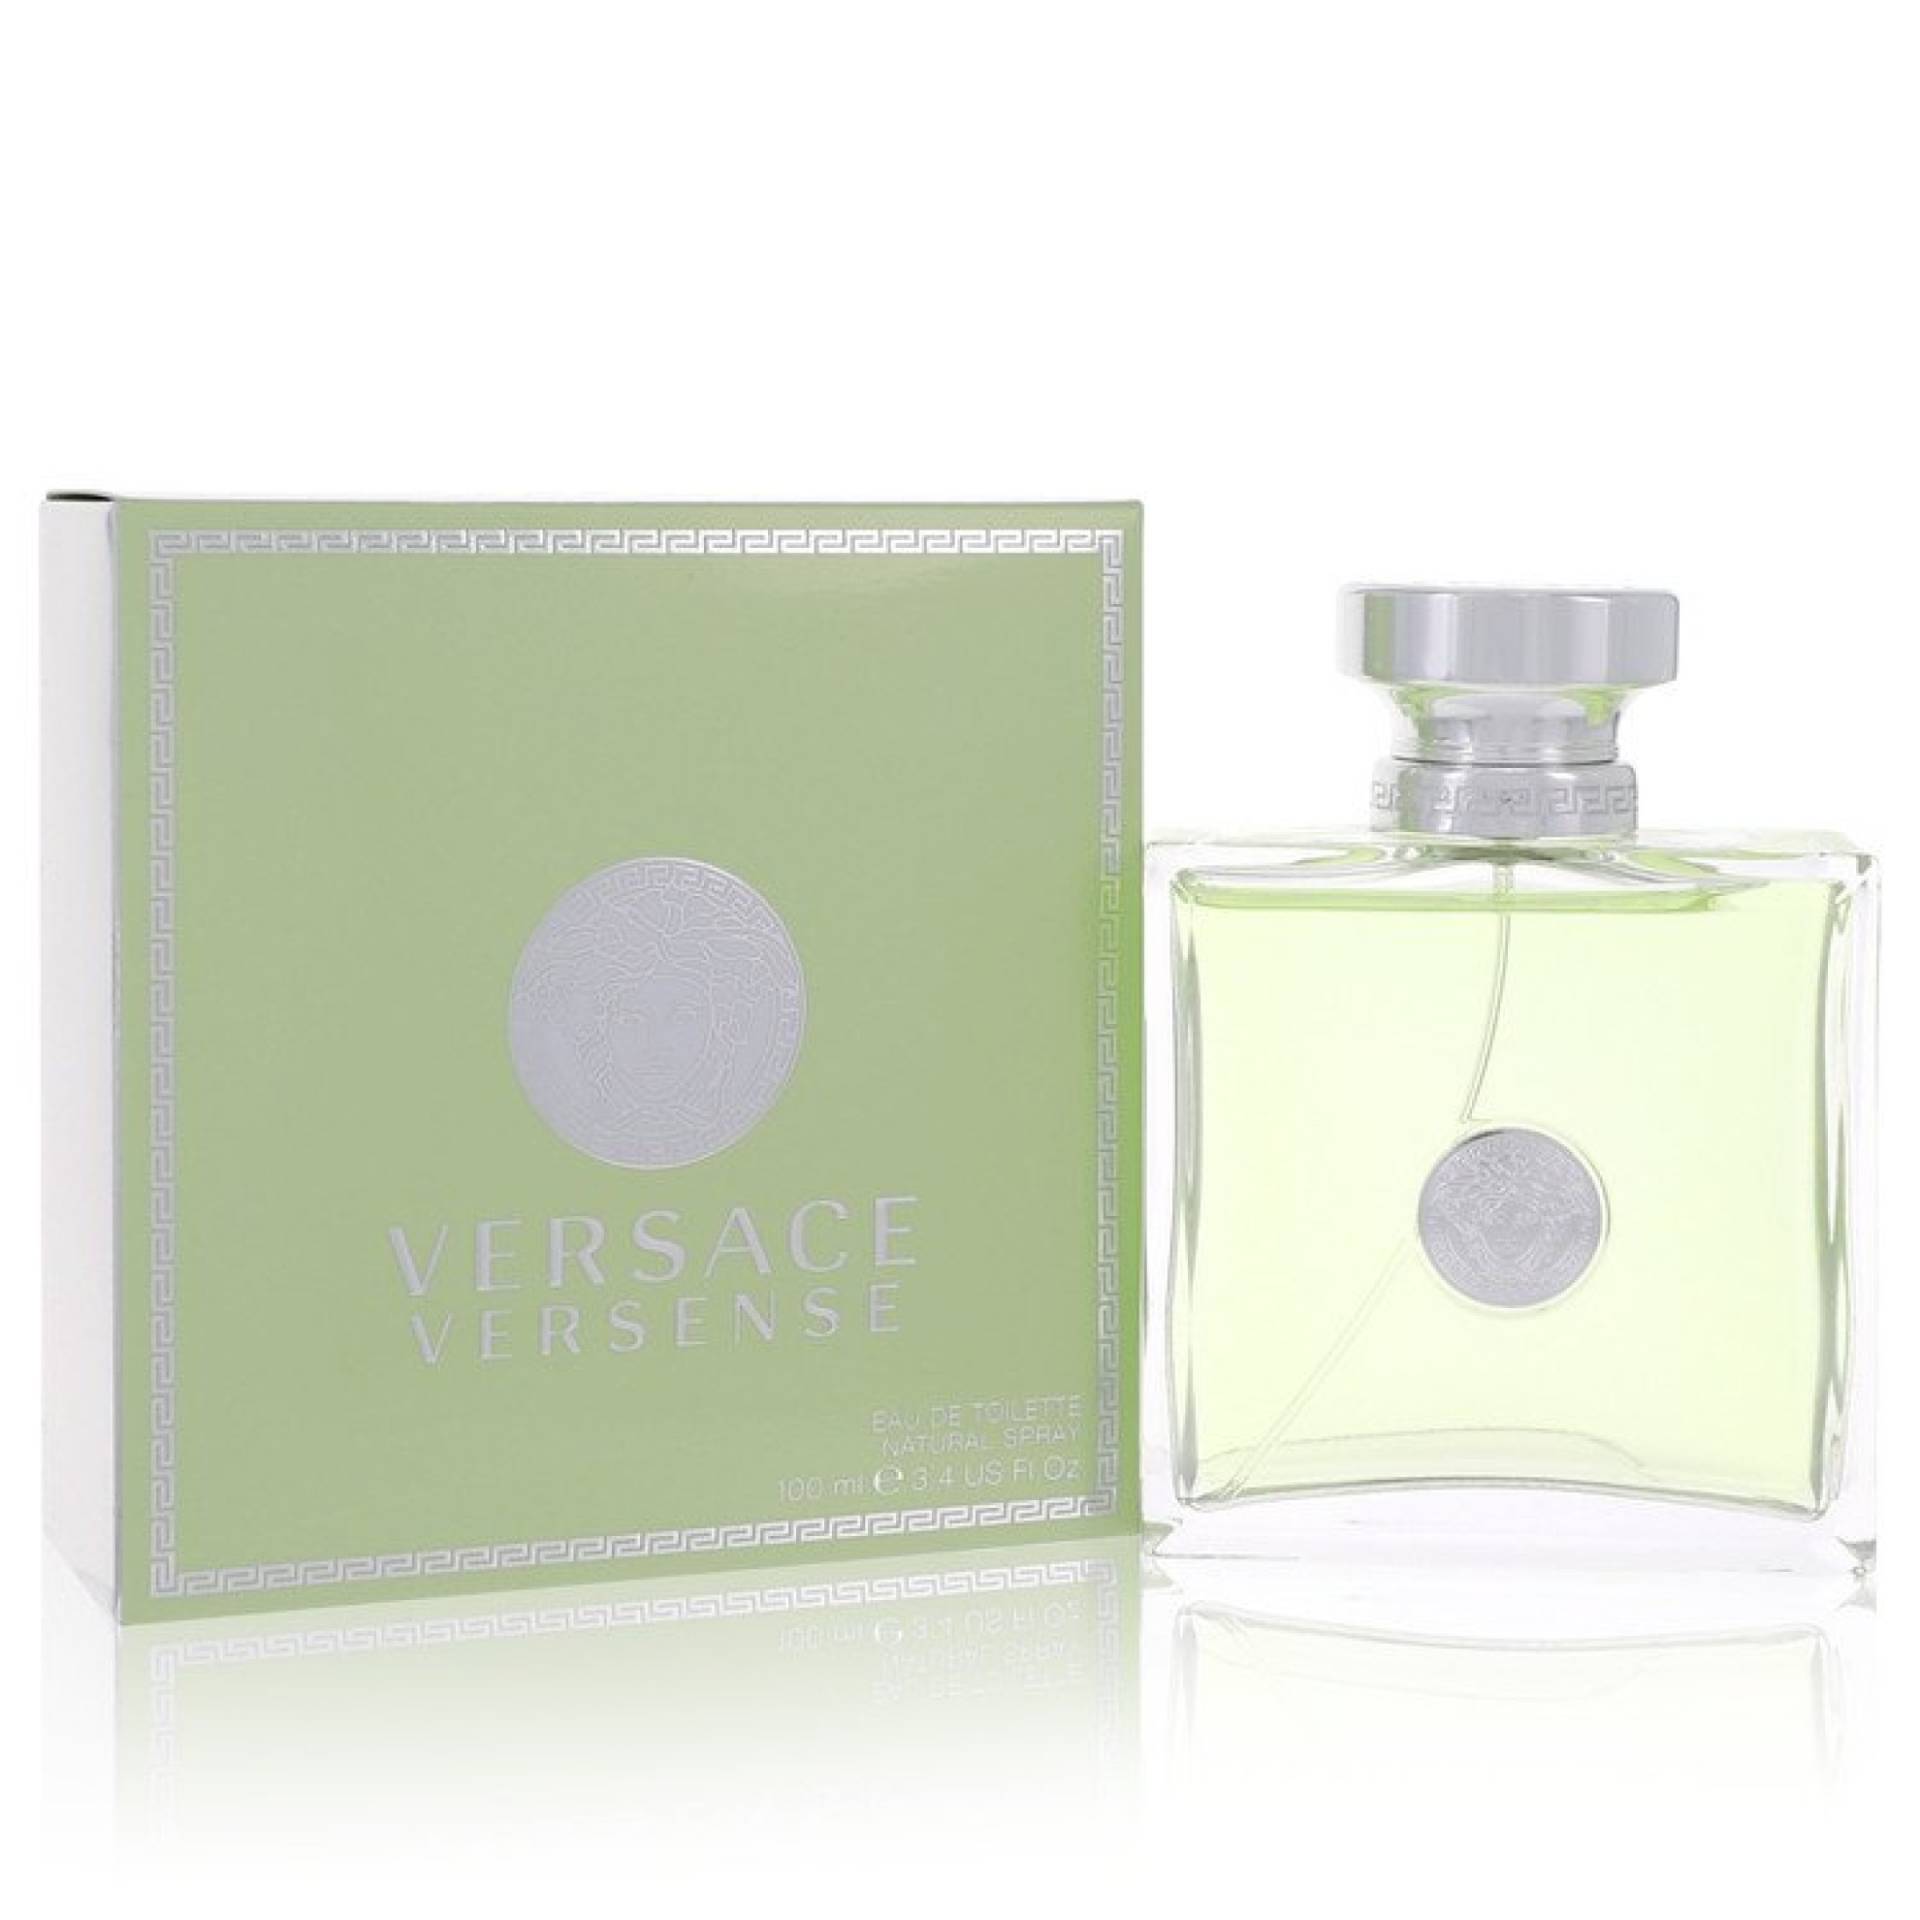 Versace Versense Eau De Toilette Spray 100 ml von Versace